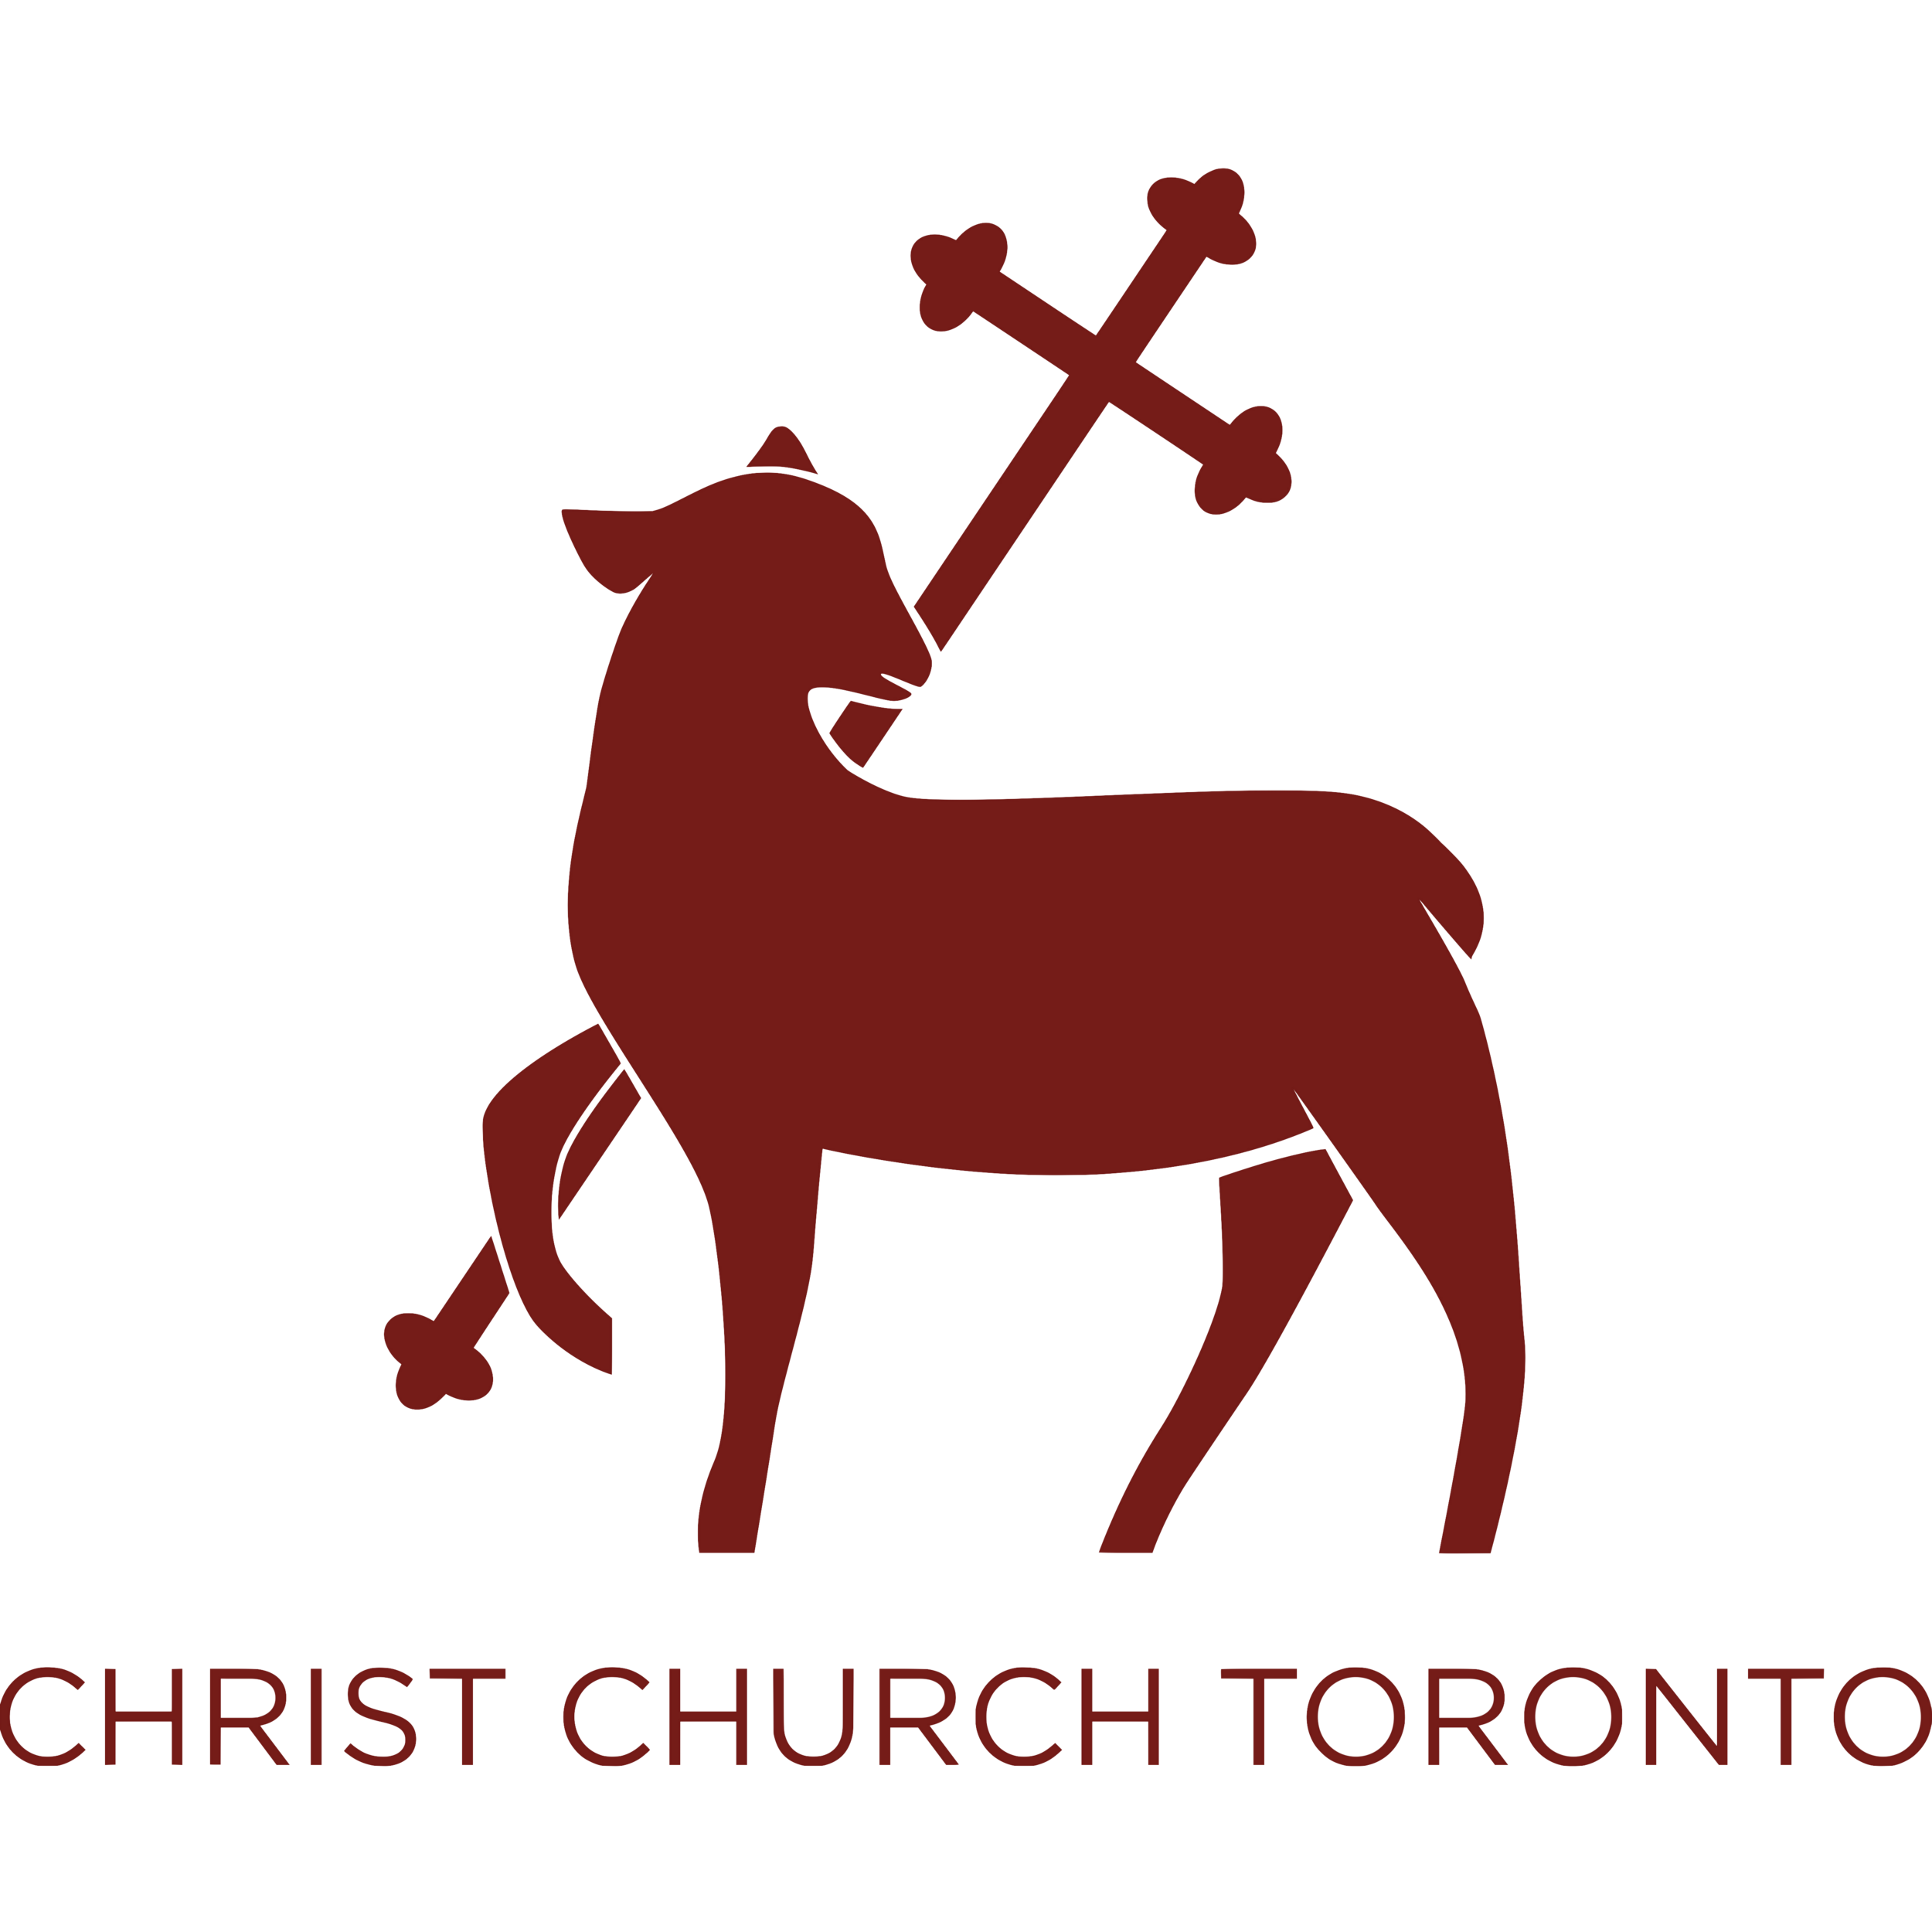 Christ Church Toronto